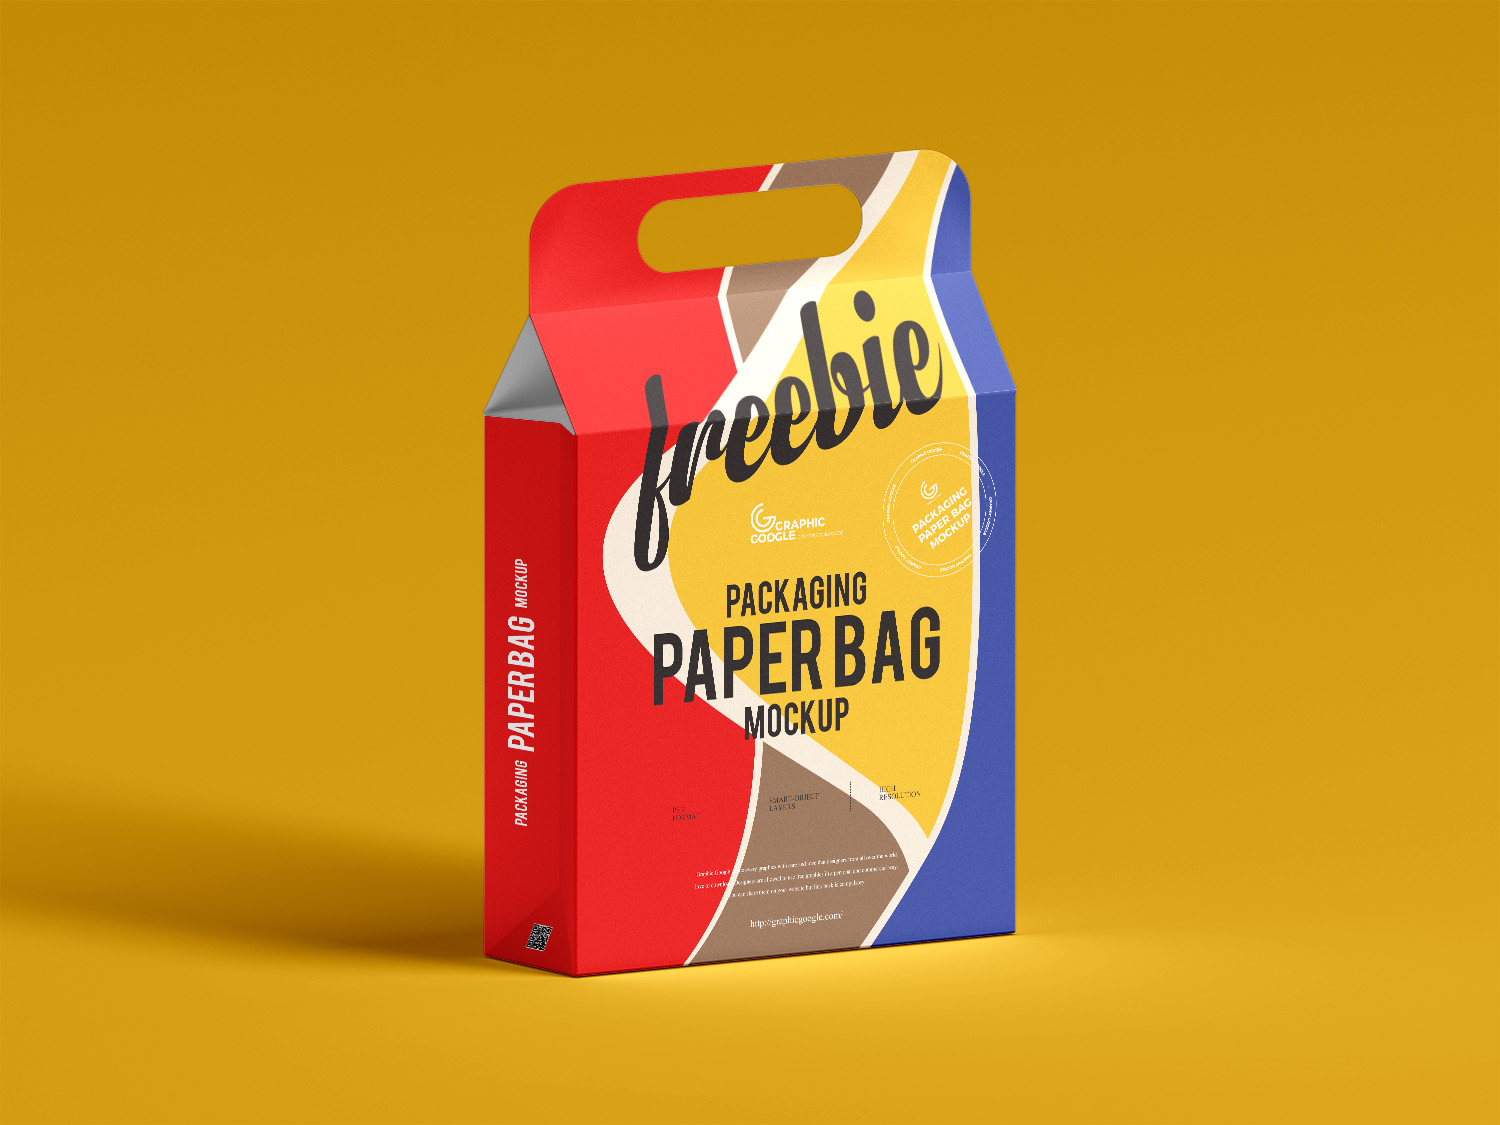 Packaging Paper Bag Mockup